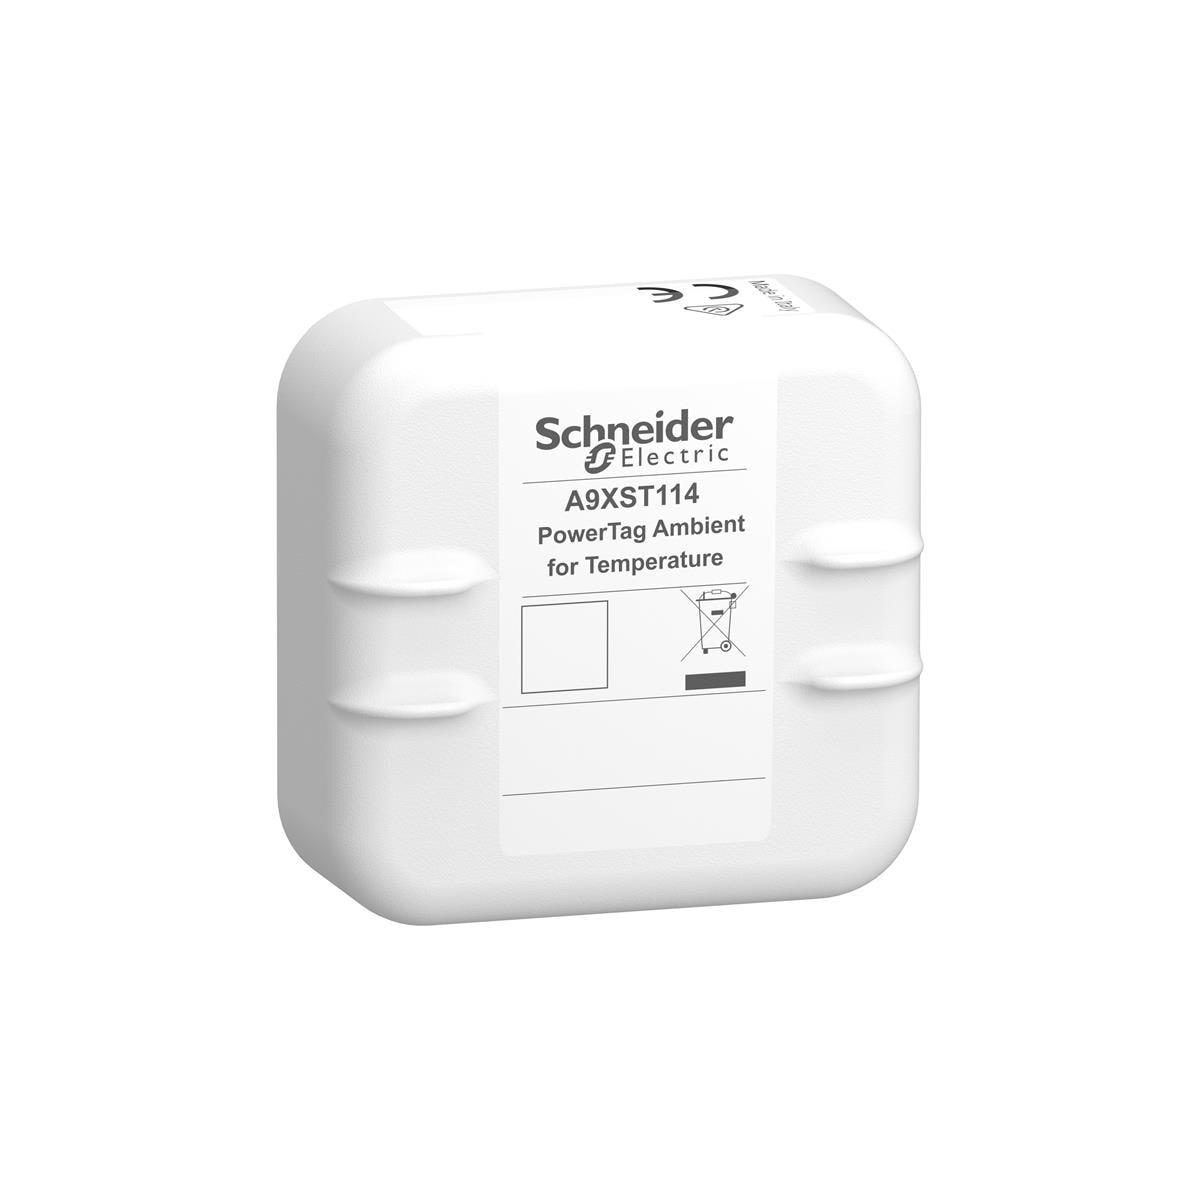 Schneider Electric drahtloser Temperatursensor